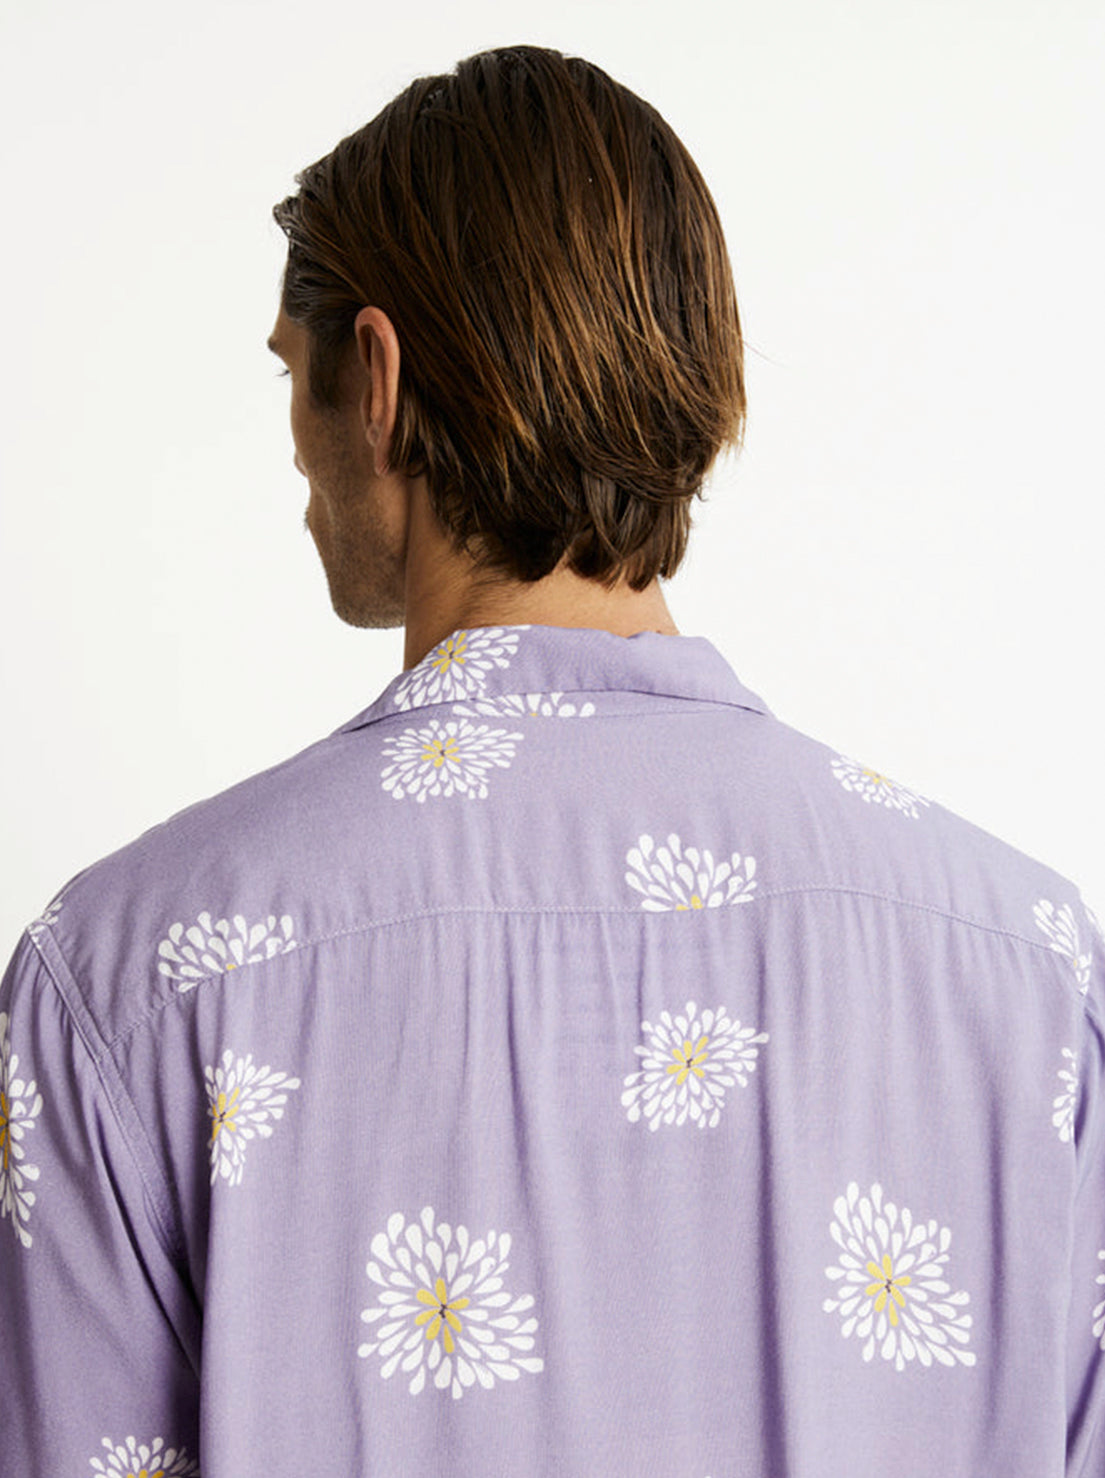 Mr Simple - Zed Bowler SS Shirt - Light Violet Oversized Flower